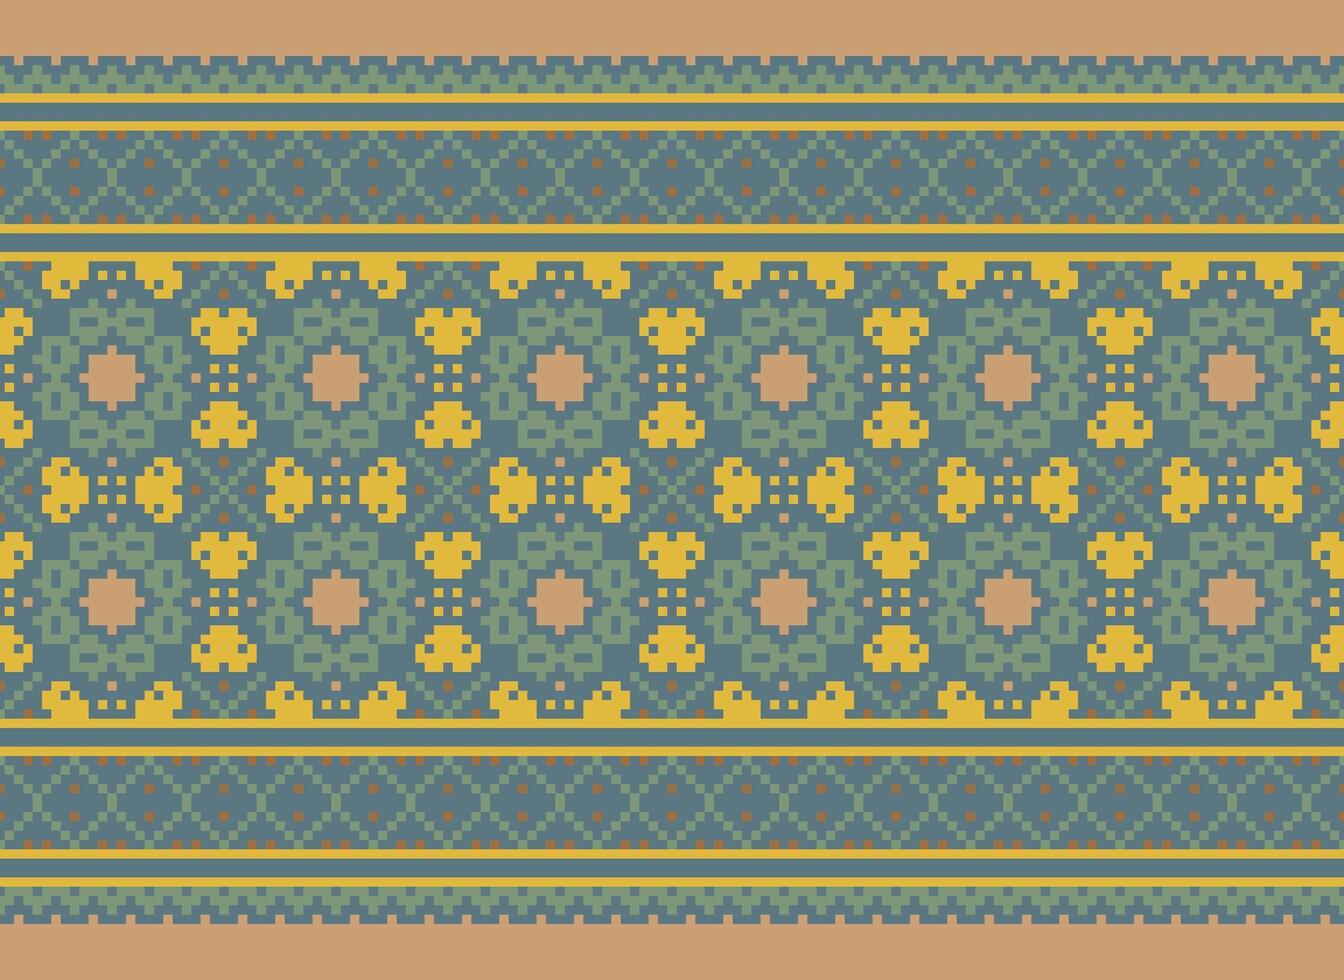 pixel korsa sy mönster med blommig mönster. traditionell korsa sy handarbete. geometrisk etnisk mönster, broderi, textil- ornament, tyg, hand sys mönster, kulturell söm vektor